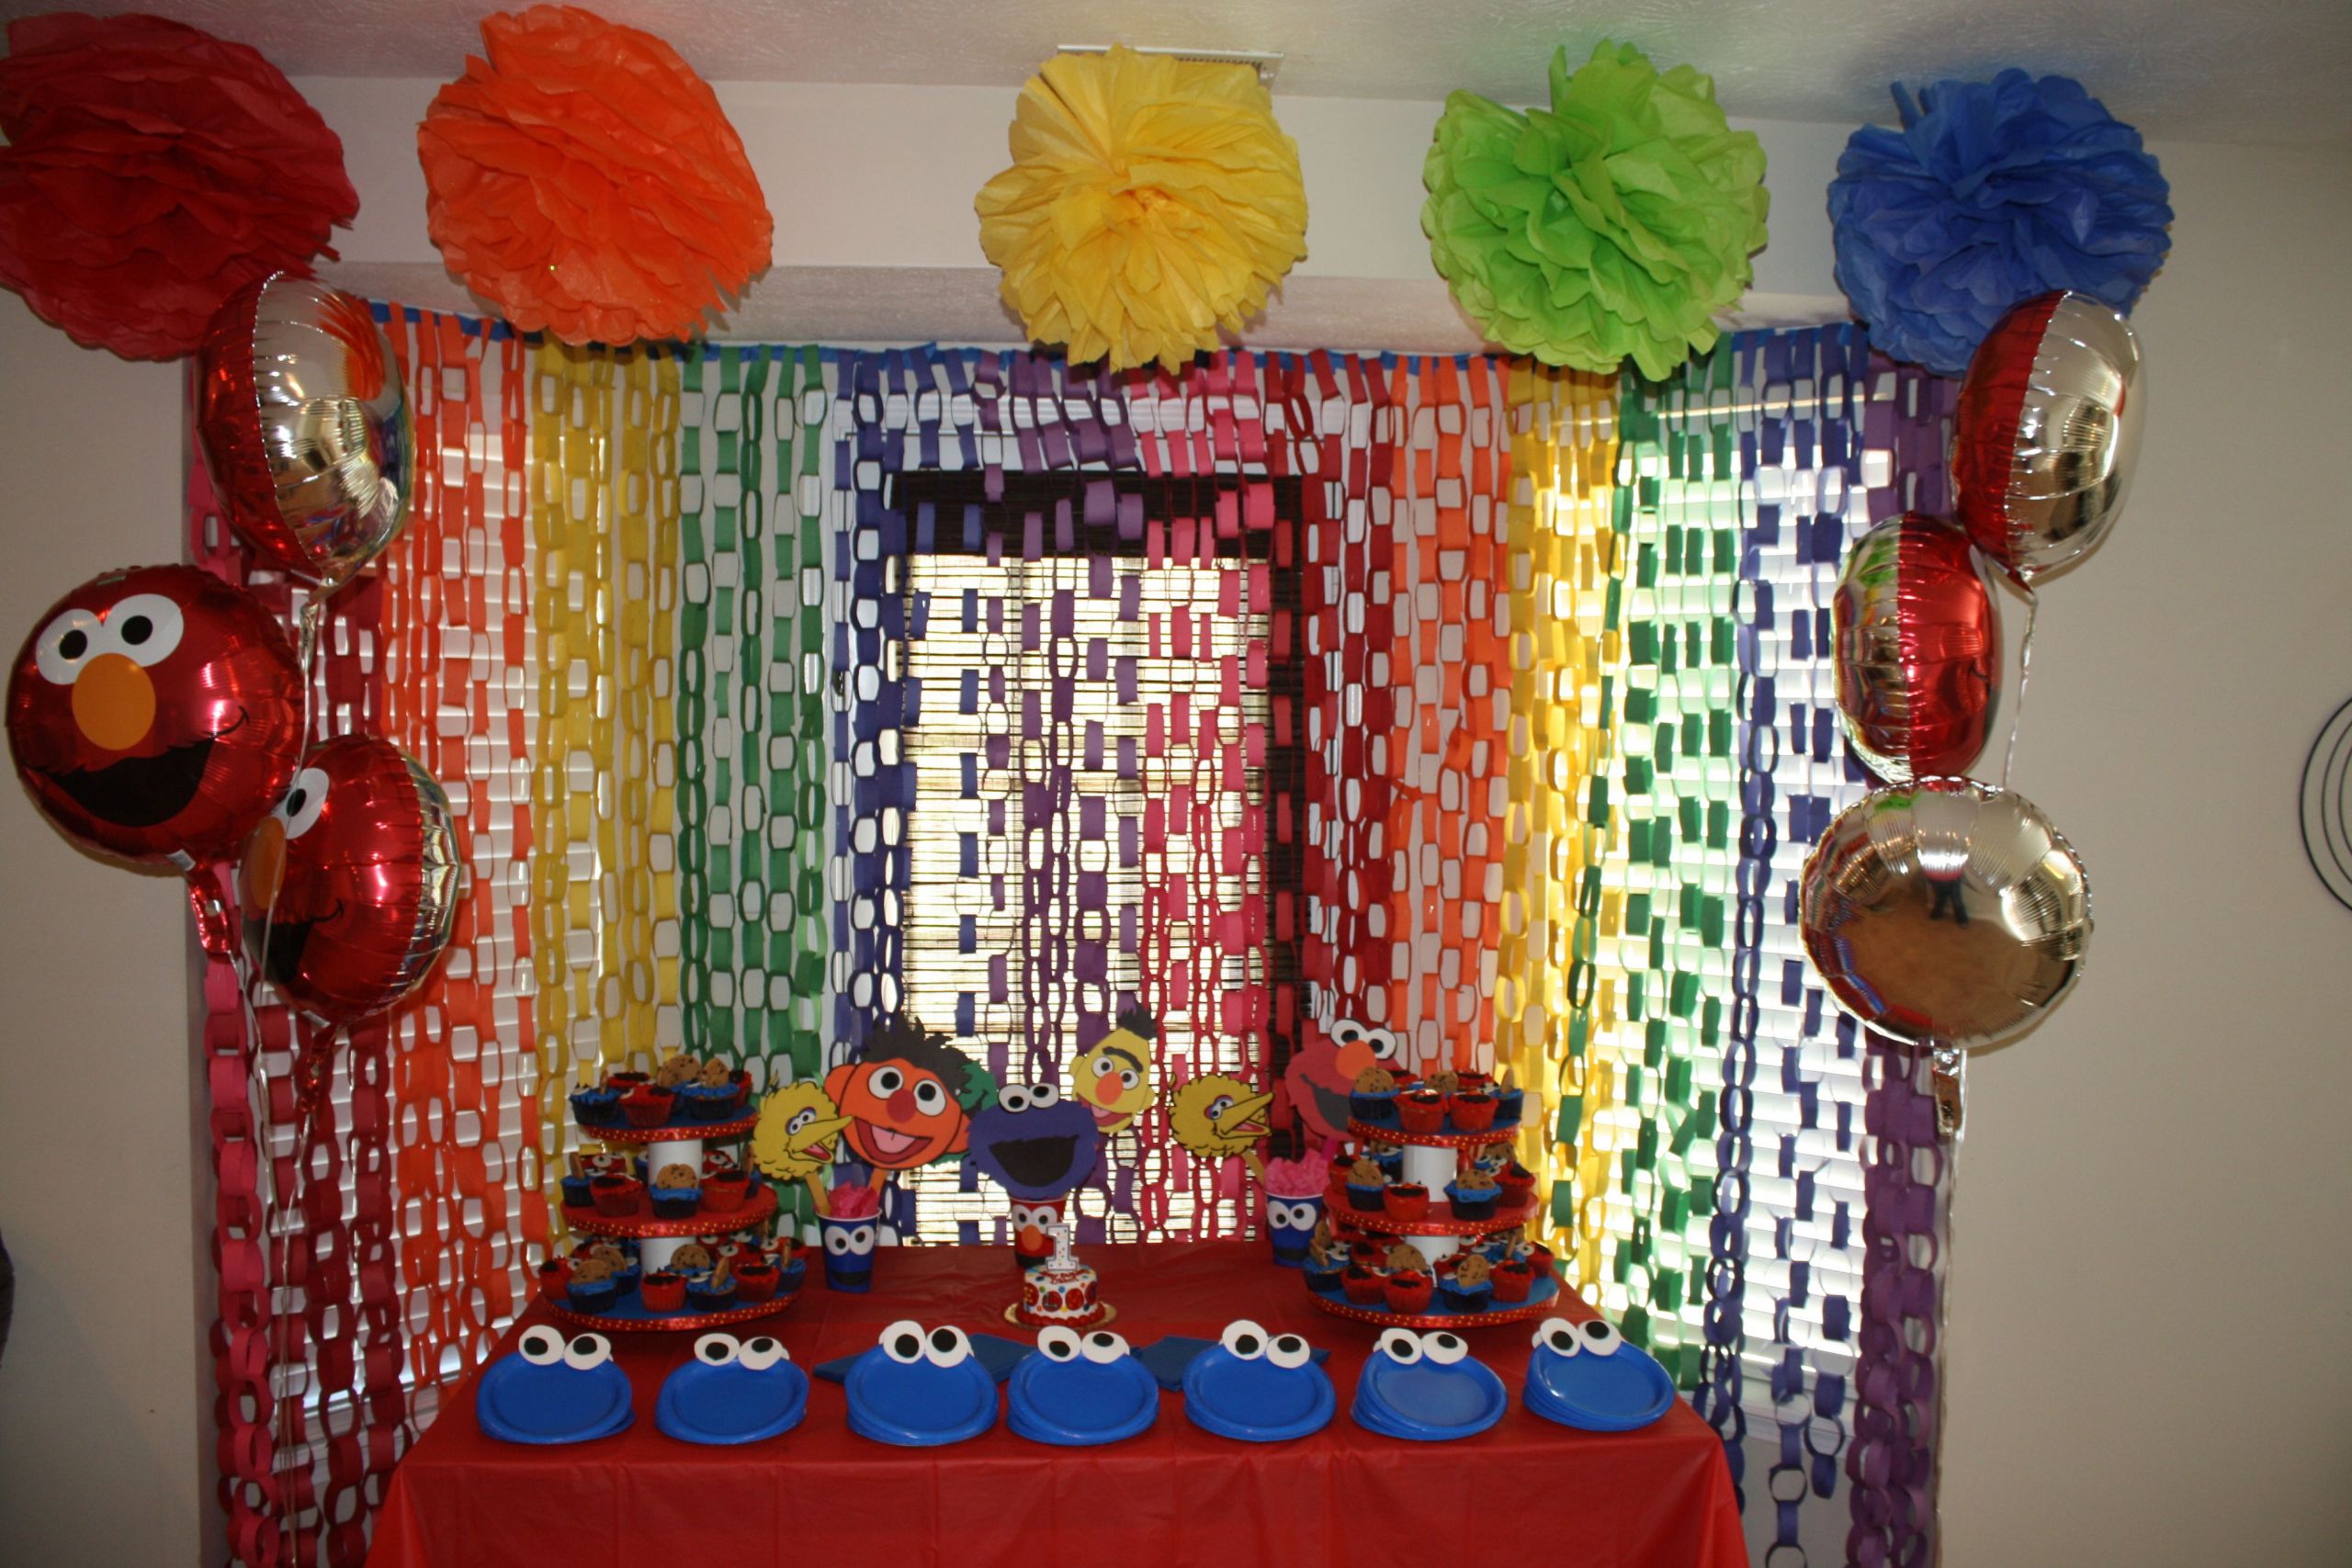 Sesame Street DIY Decorations
 Home made decorations for an Elmo Sesame Street themed